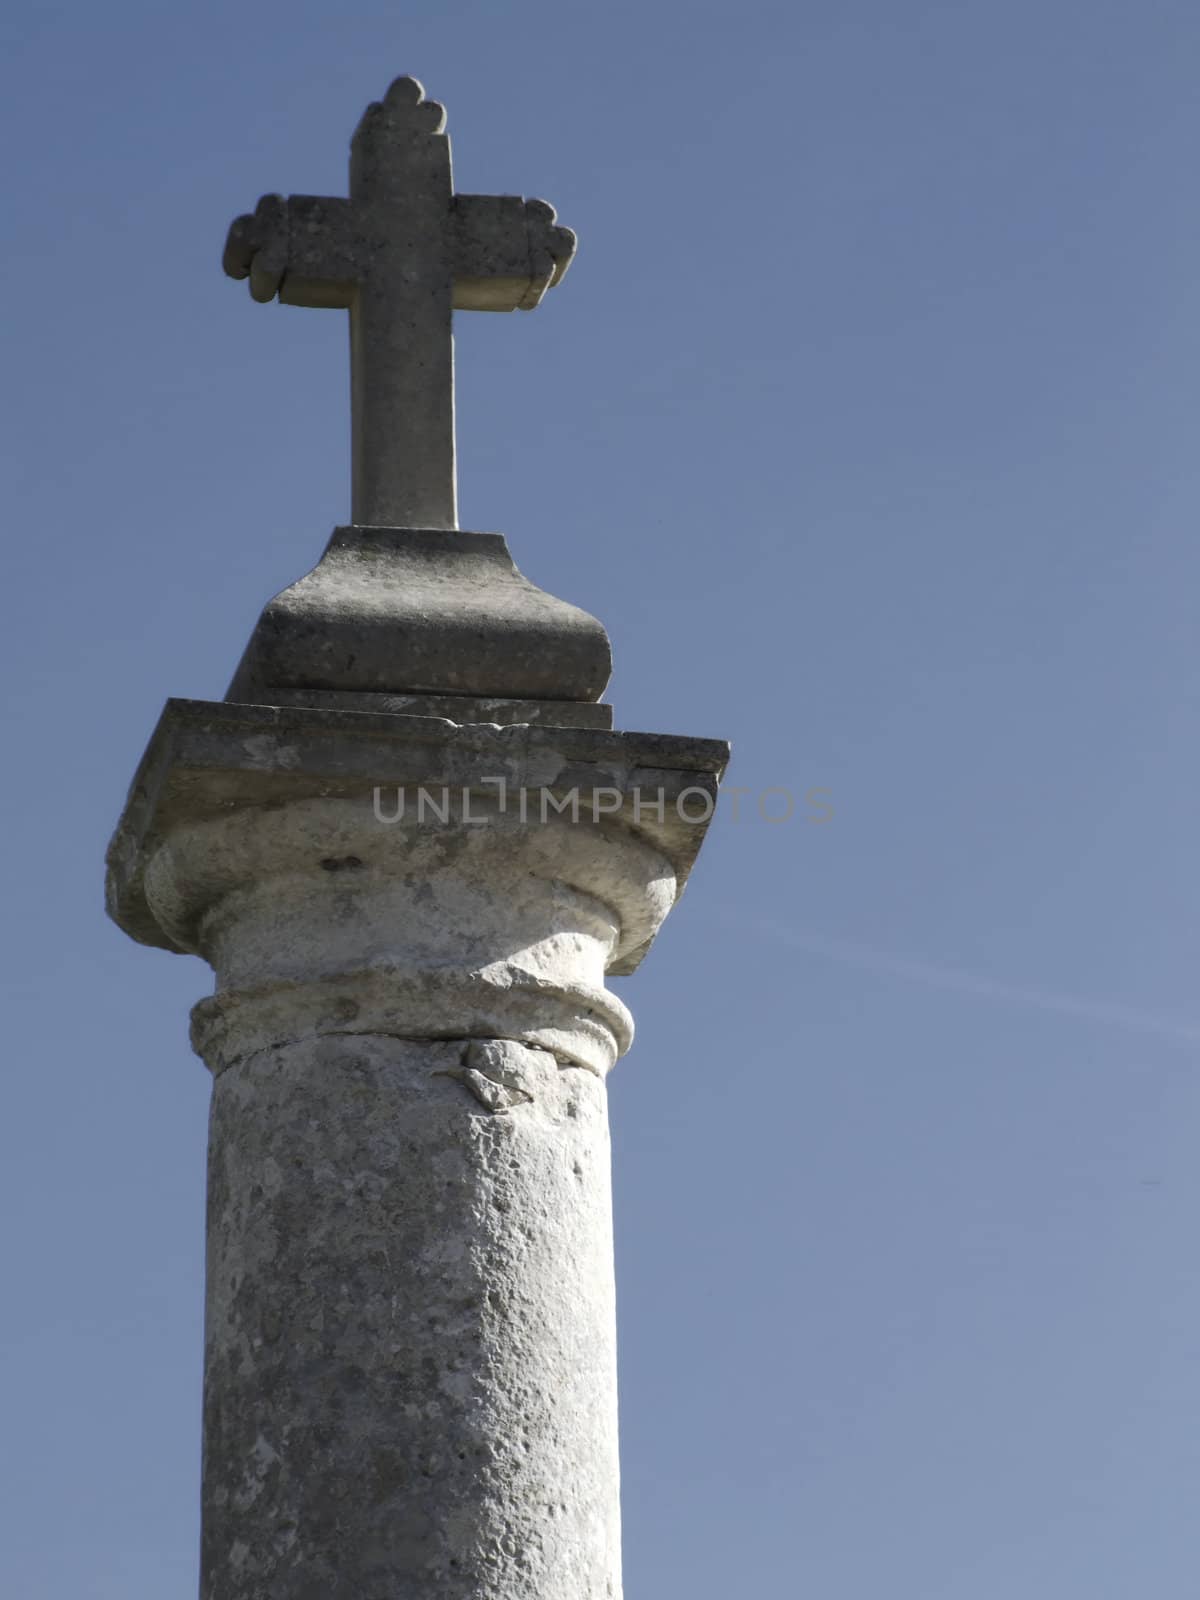 Detail of limestone pillar depicting stone cross - found in various localities around Malta